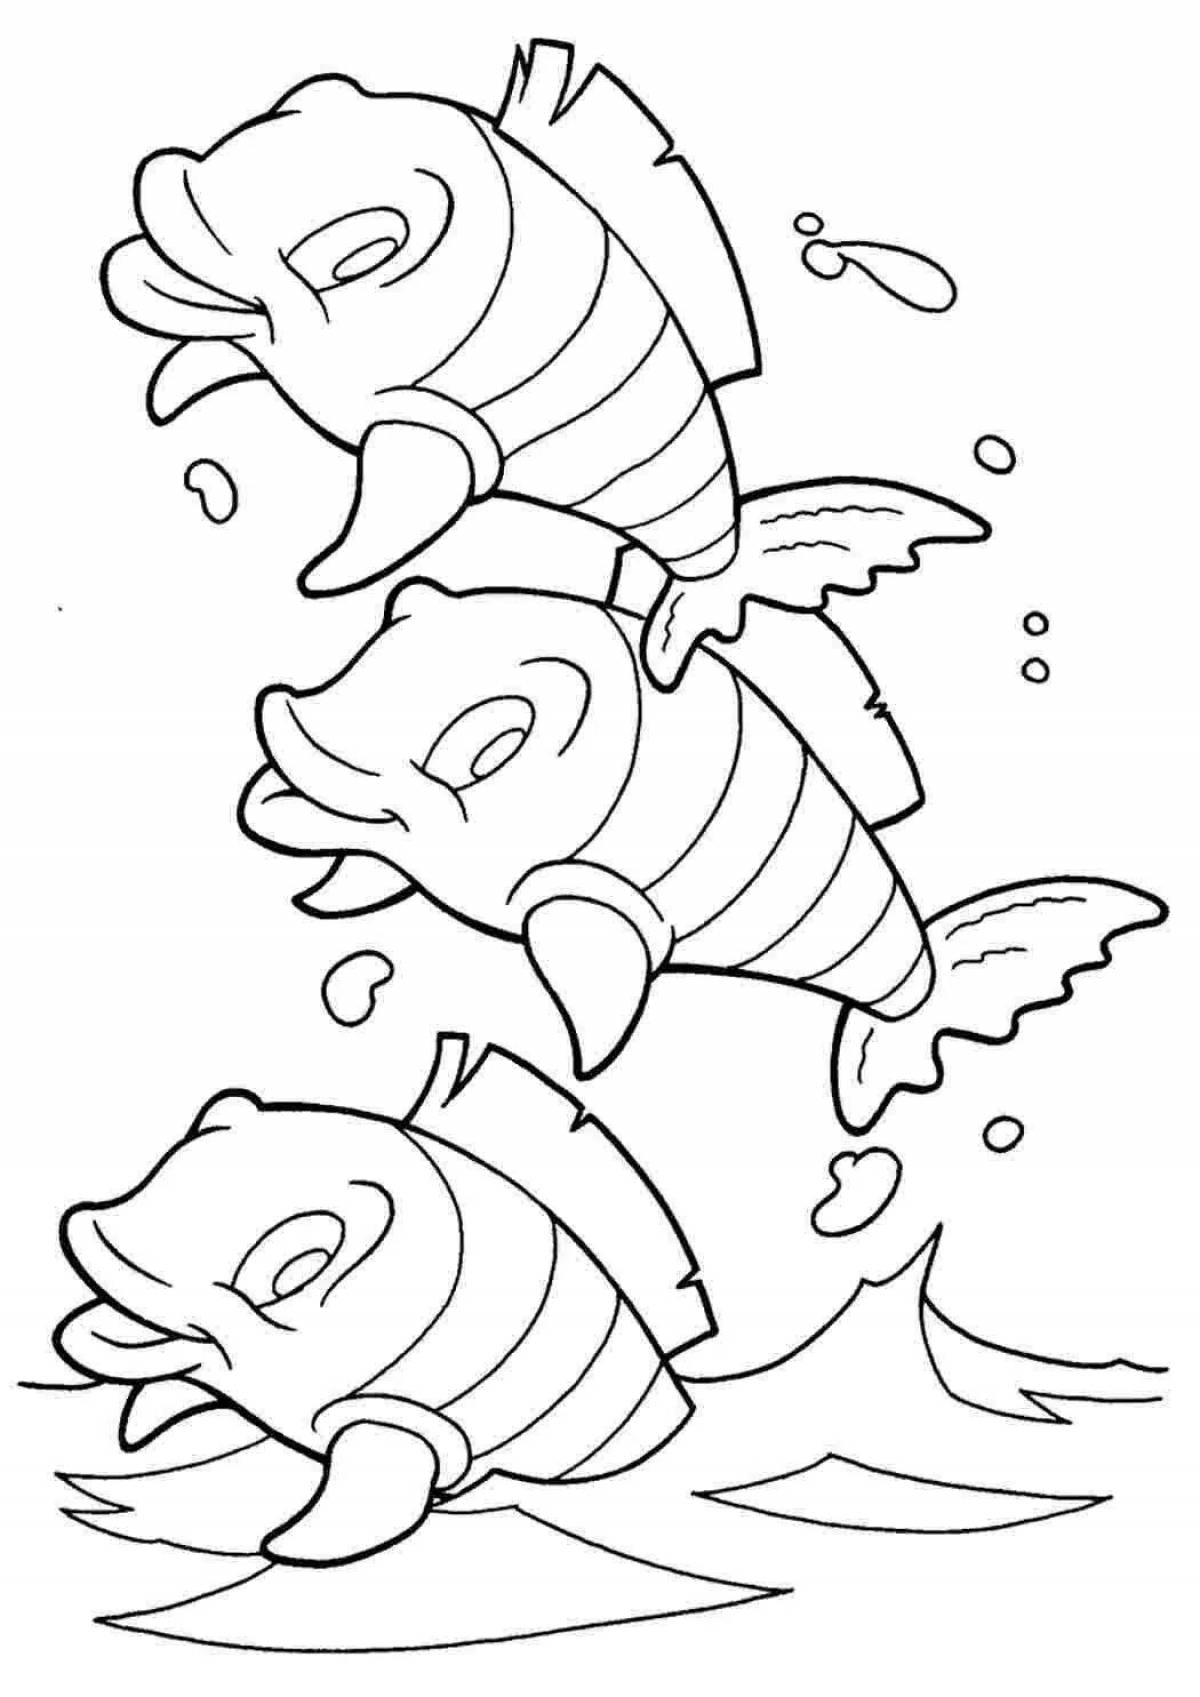 Раскраска рыбки для детей 5 6 лет. Раскраска рыбка. Рыбка раскраска для детей. Морские рыбы раскраска для детей. Раскраска рыбки в море.